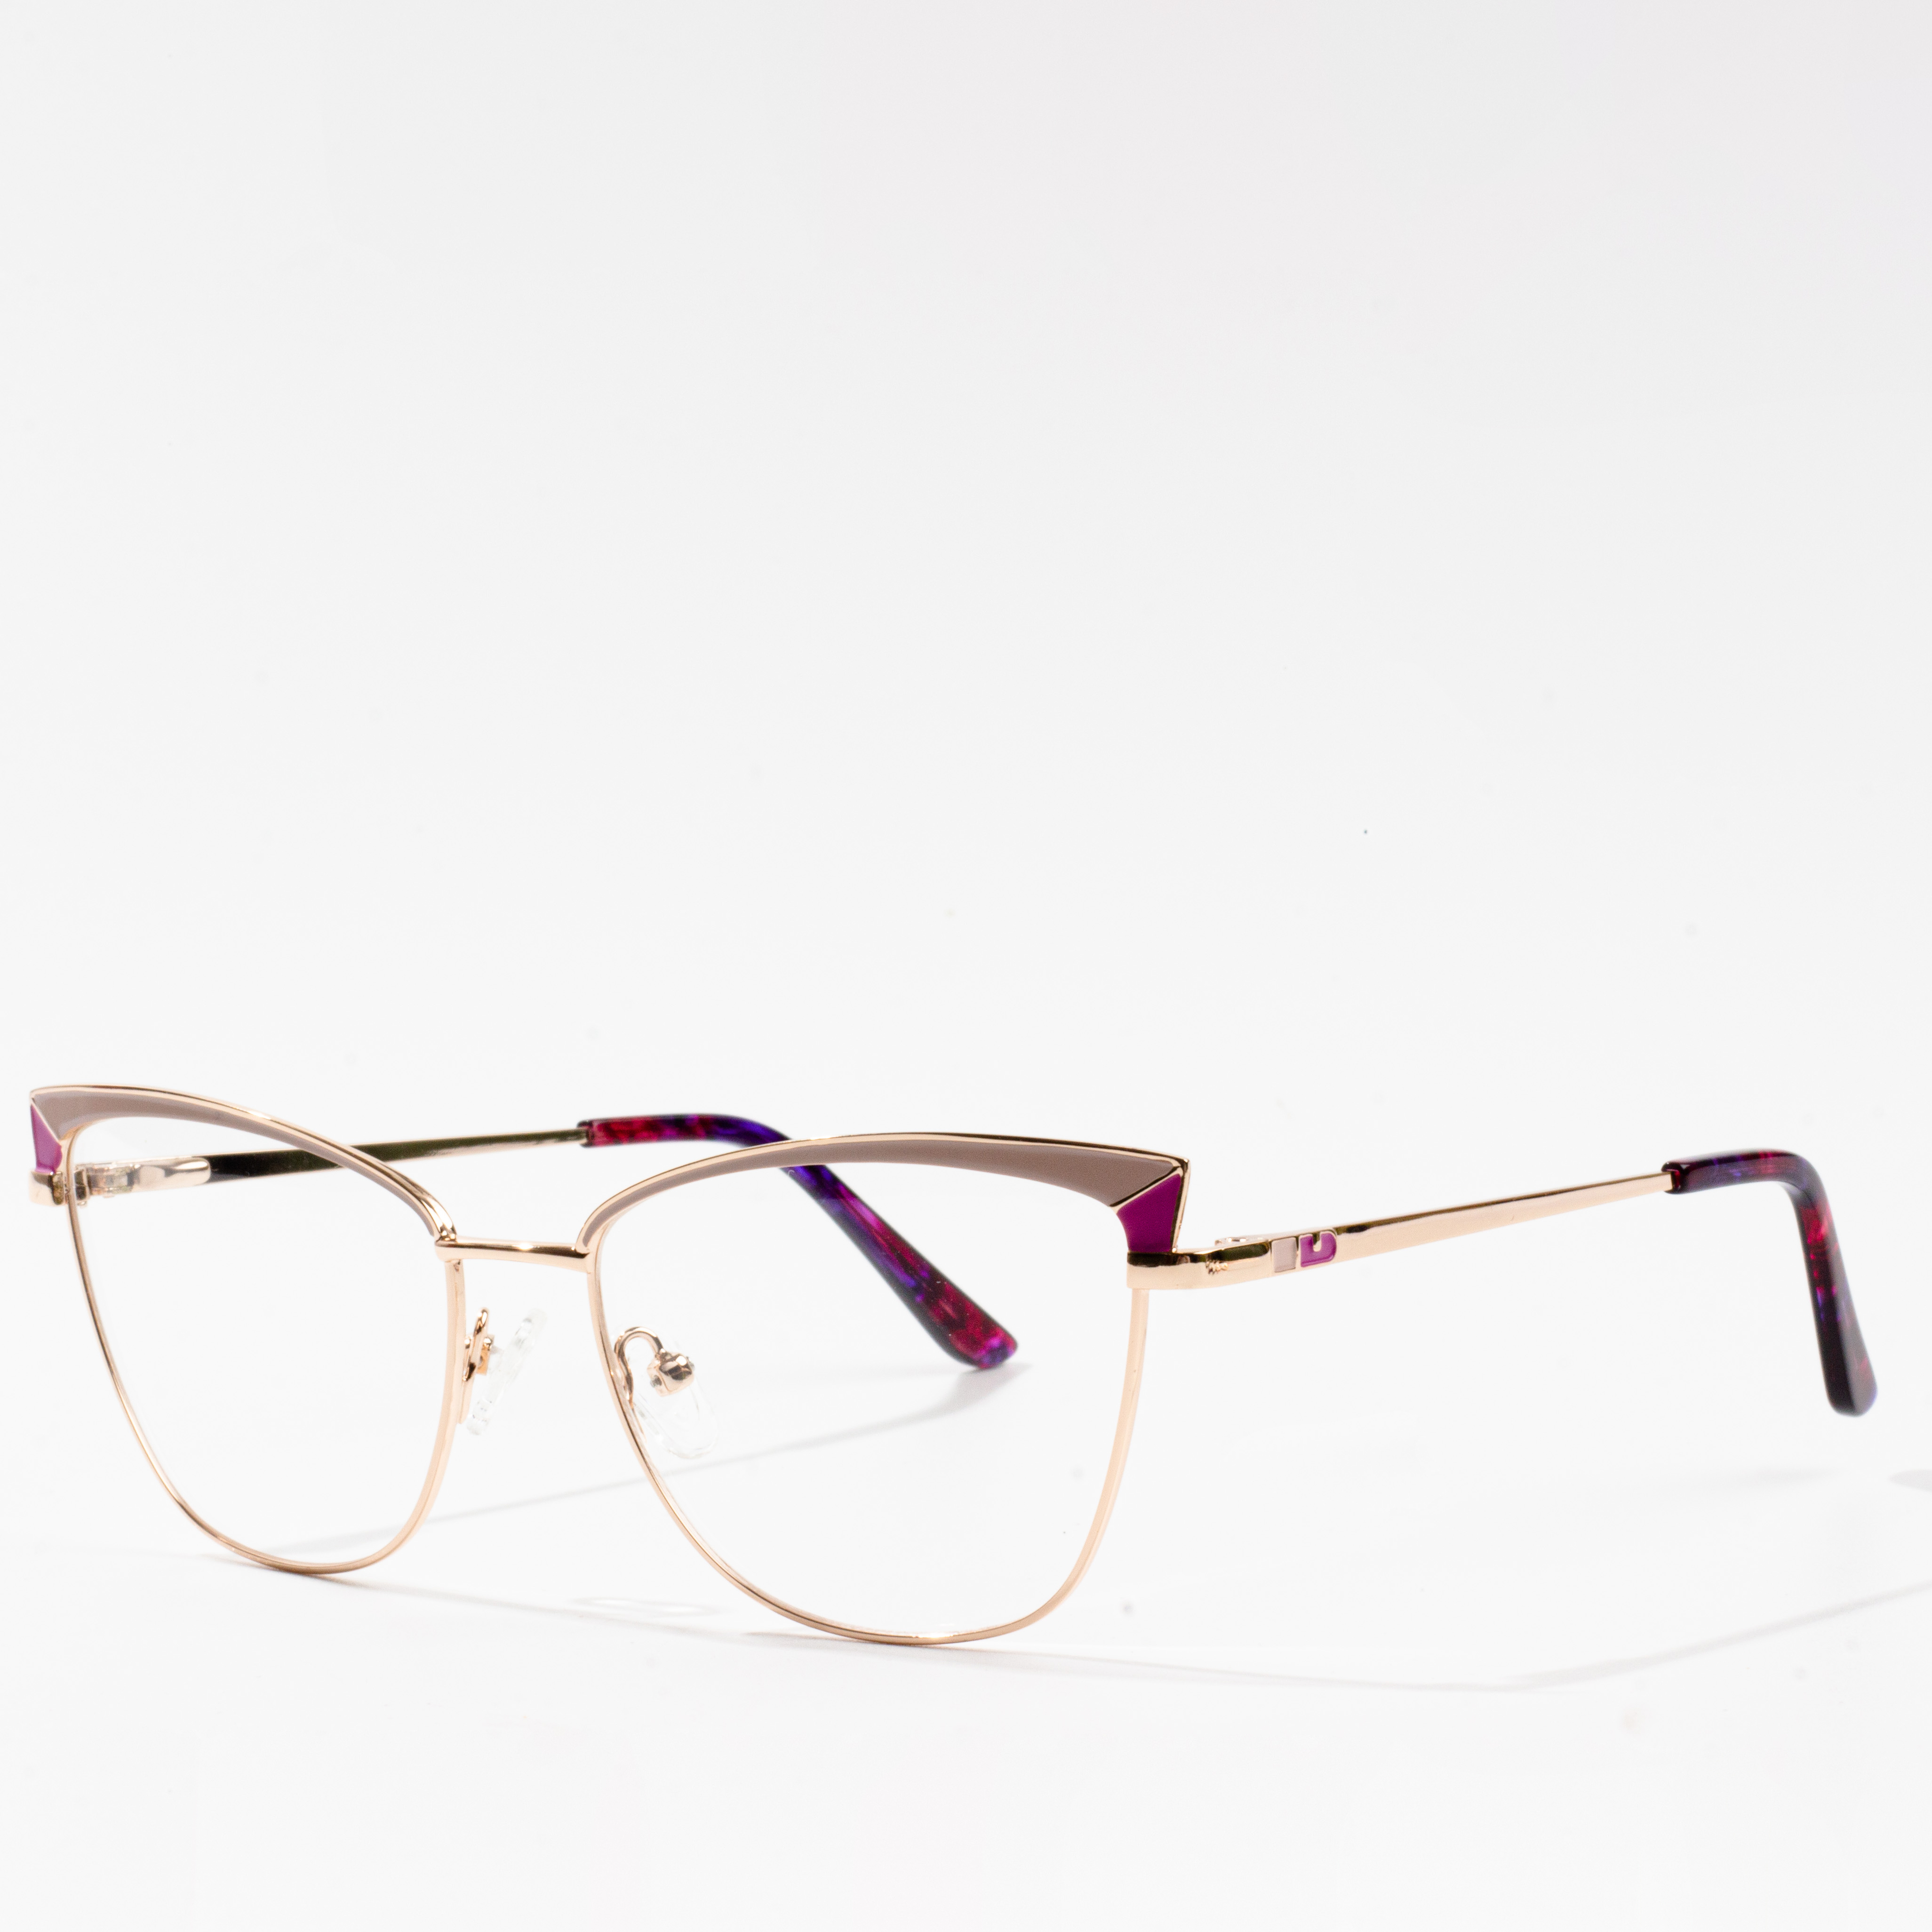 bold eyeglass frames